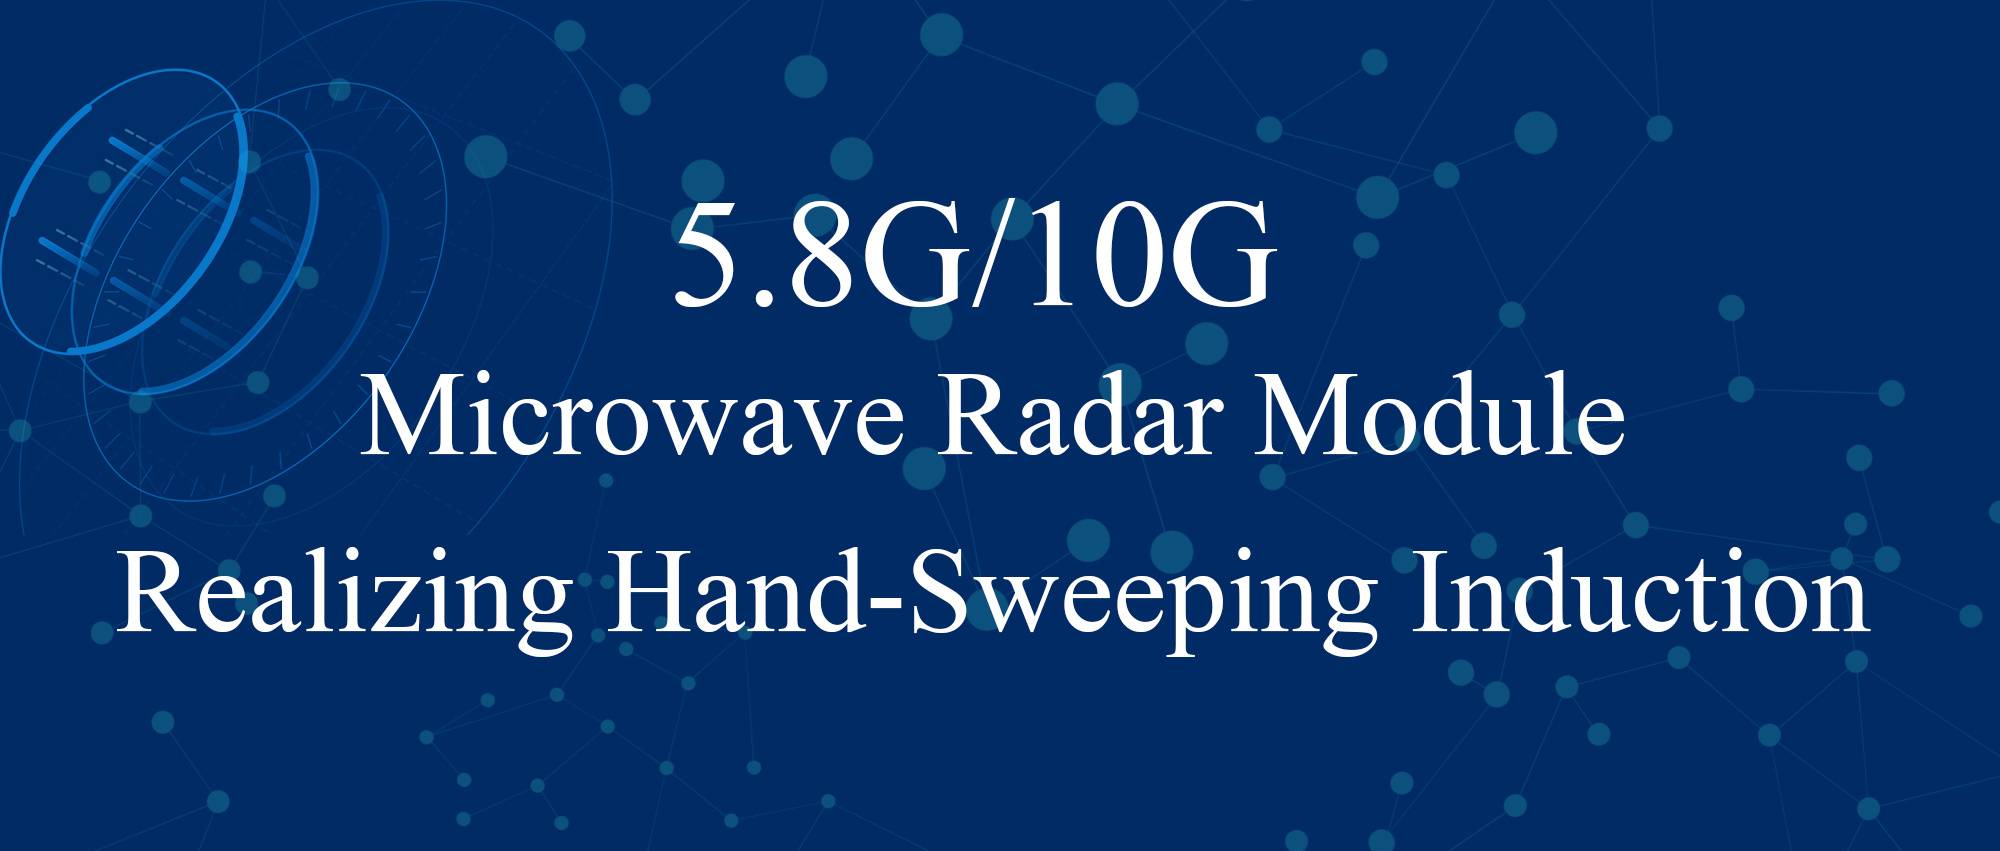 Close Distance Slight Hand-Sweeping | Shenzhen MoreSense Technology Co., Ltd. Launched a 5.8G/10G Hand-Sweeping Sensor Radar Solution